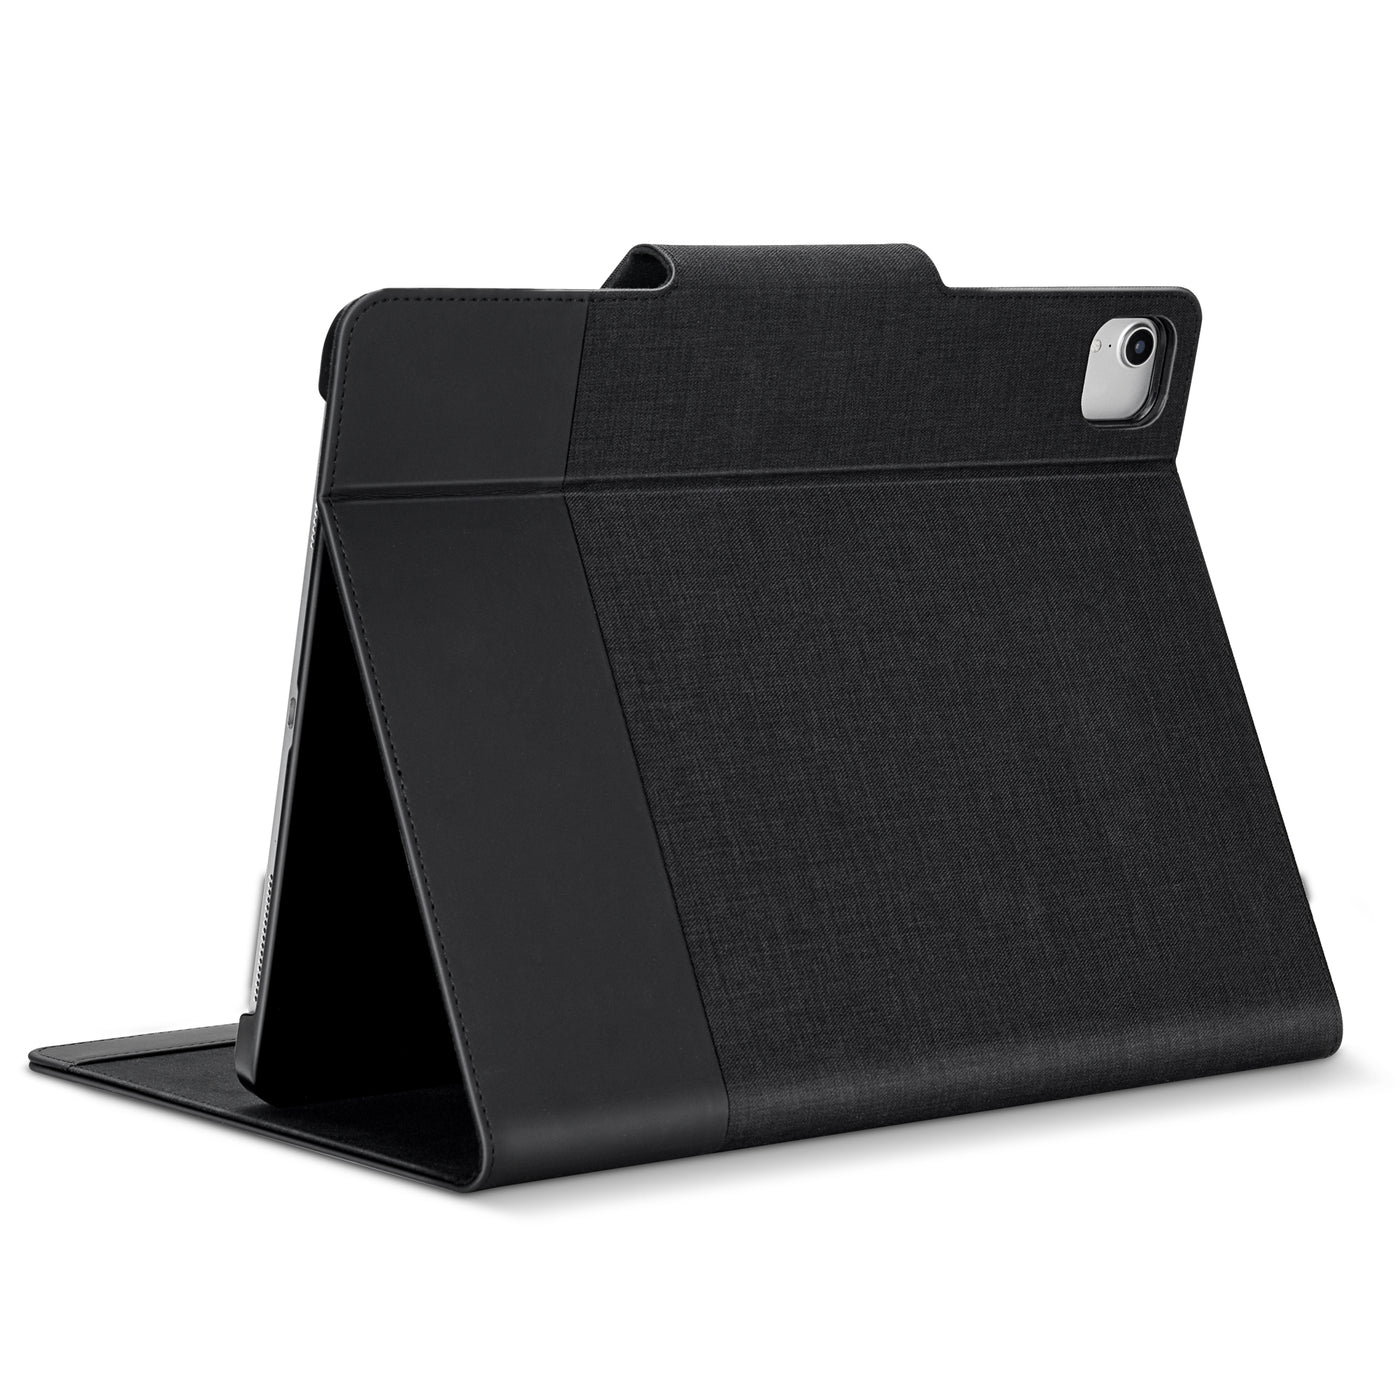 Bonelk Classic Smart Folio Case for iPad Pro 12.9” (4th/5th Gen.) - Black